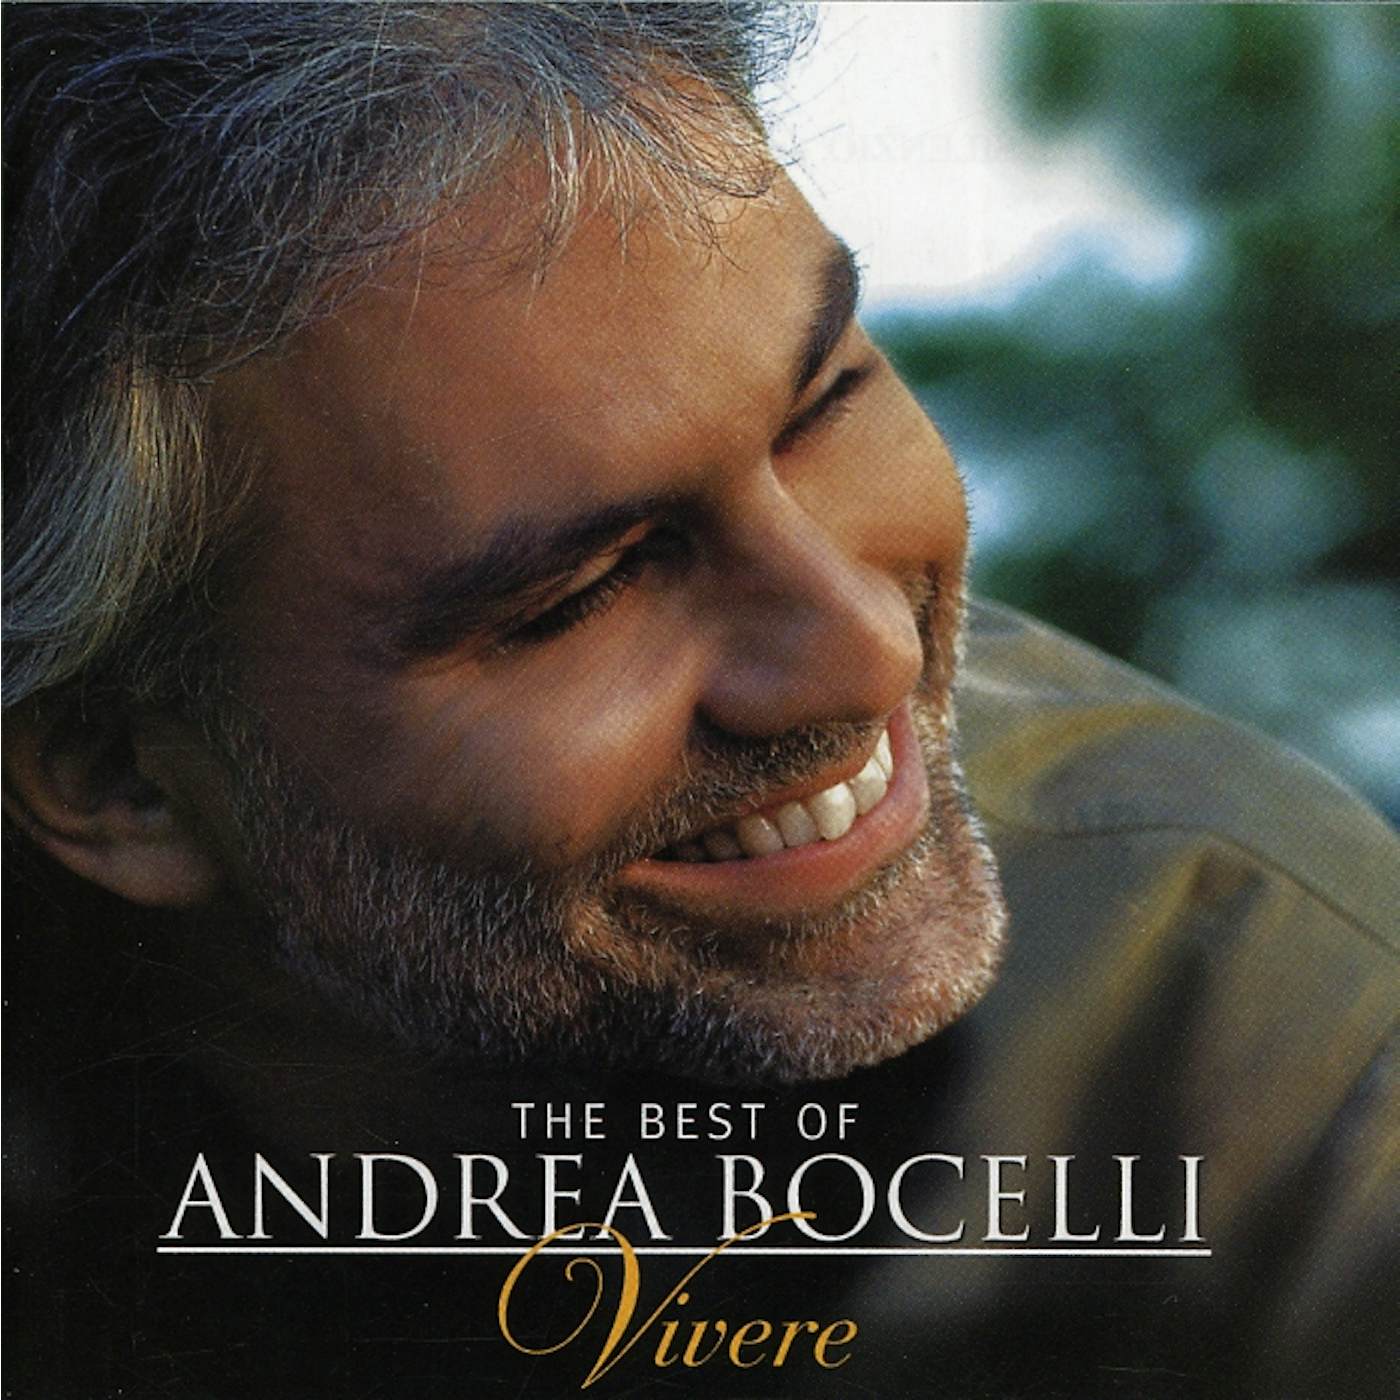 BEST OF ANDREA BOCELLI: VIVERE CD